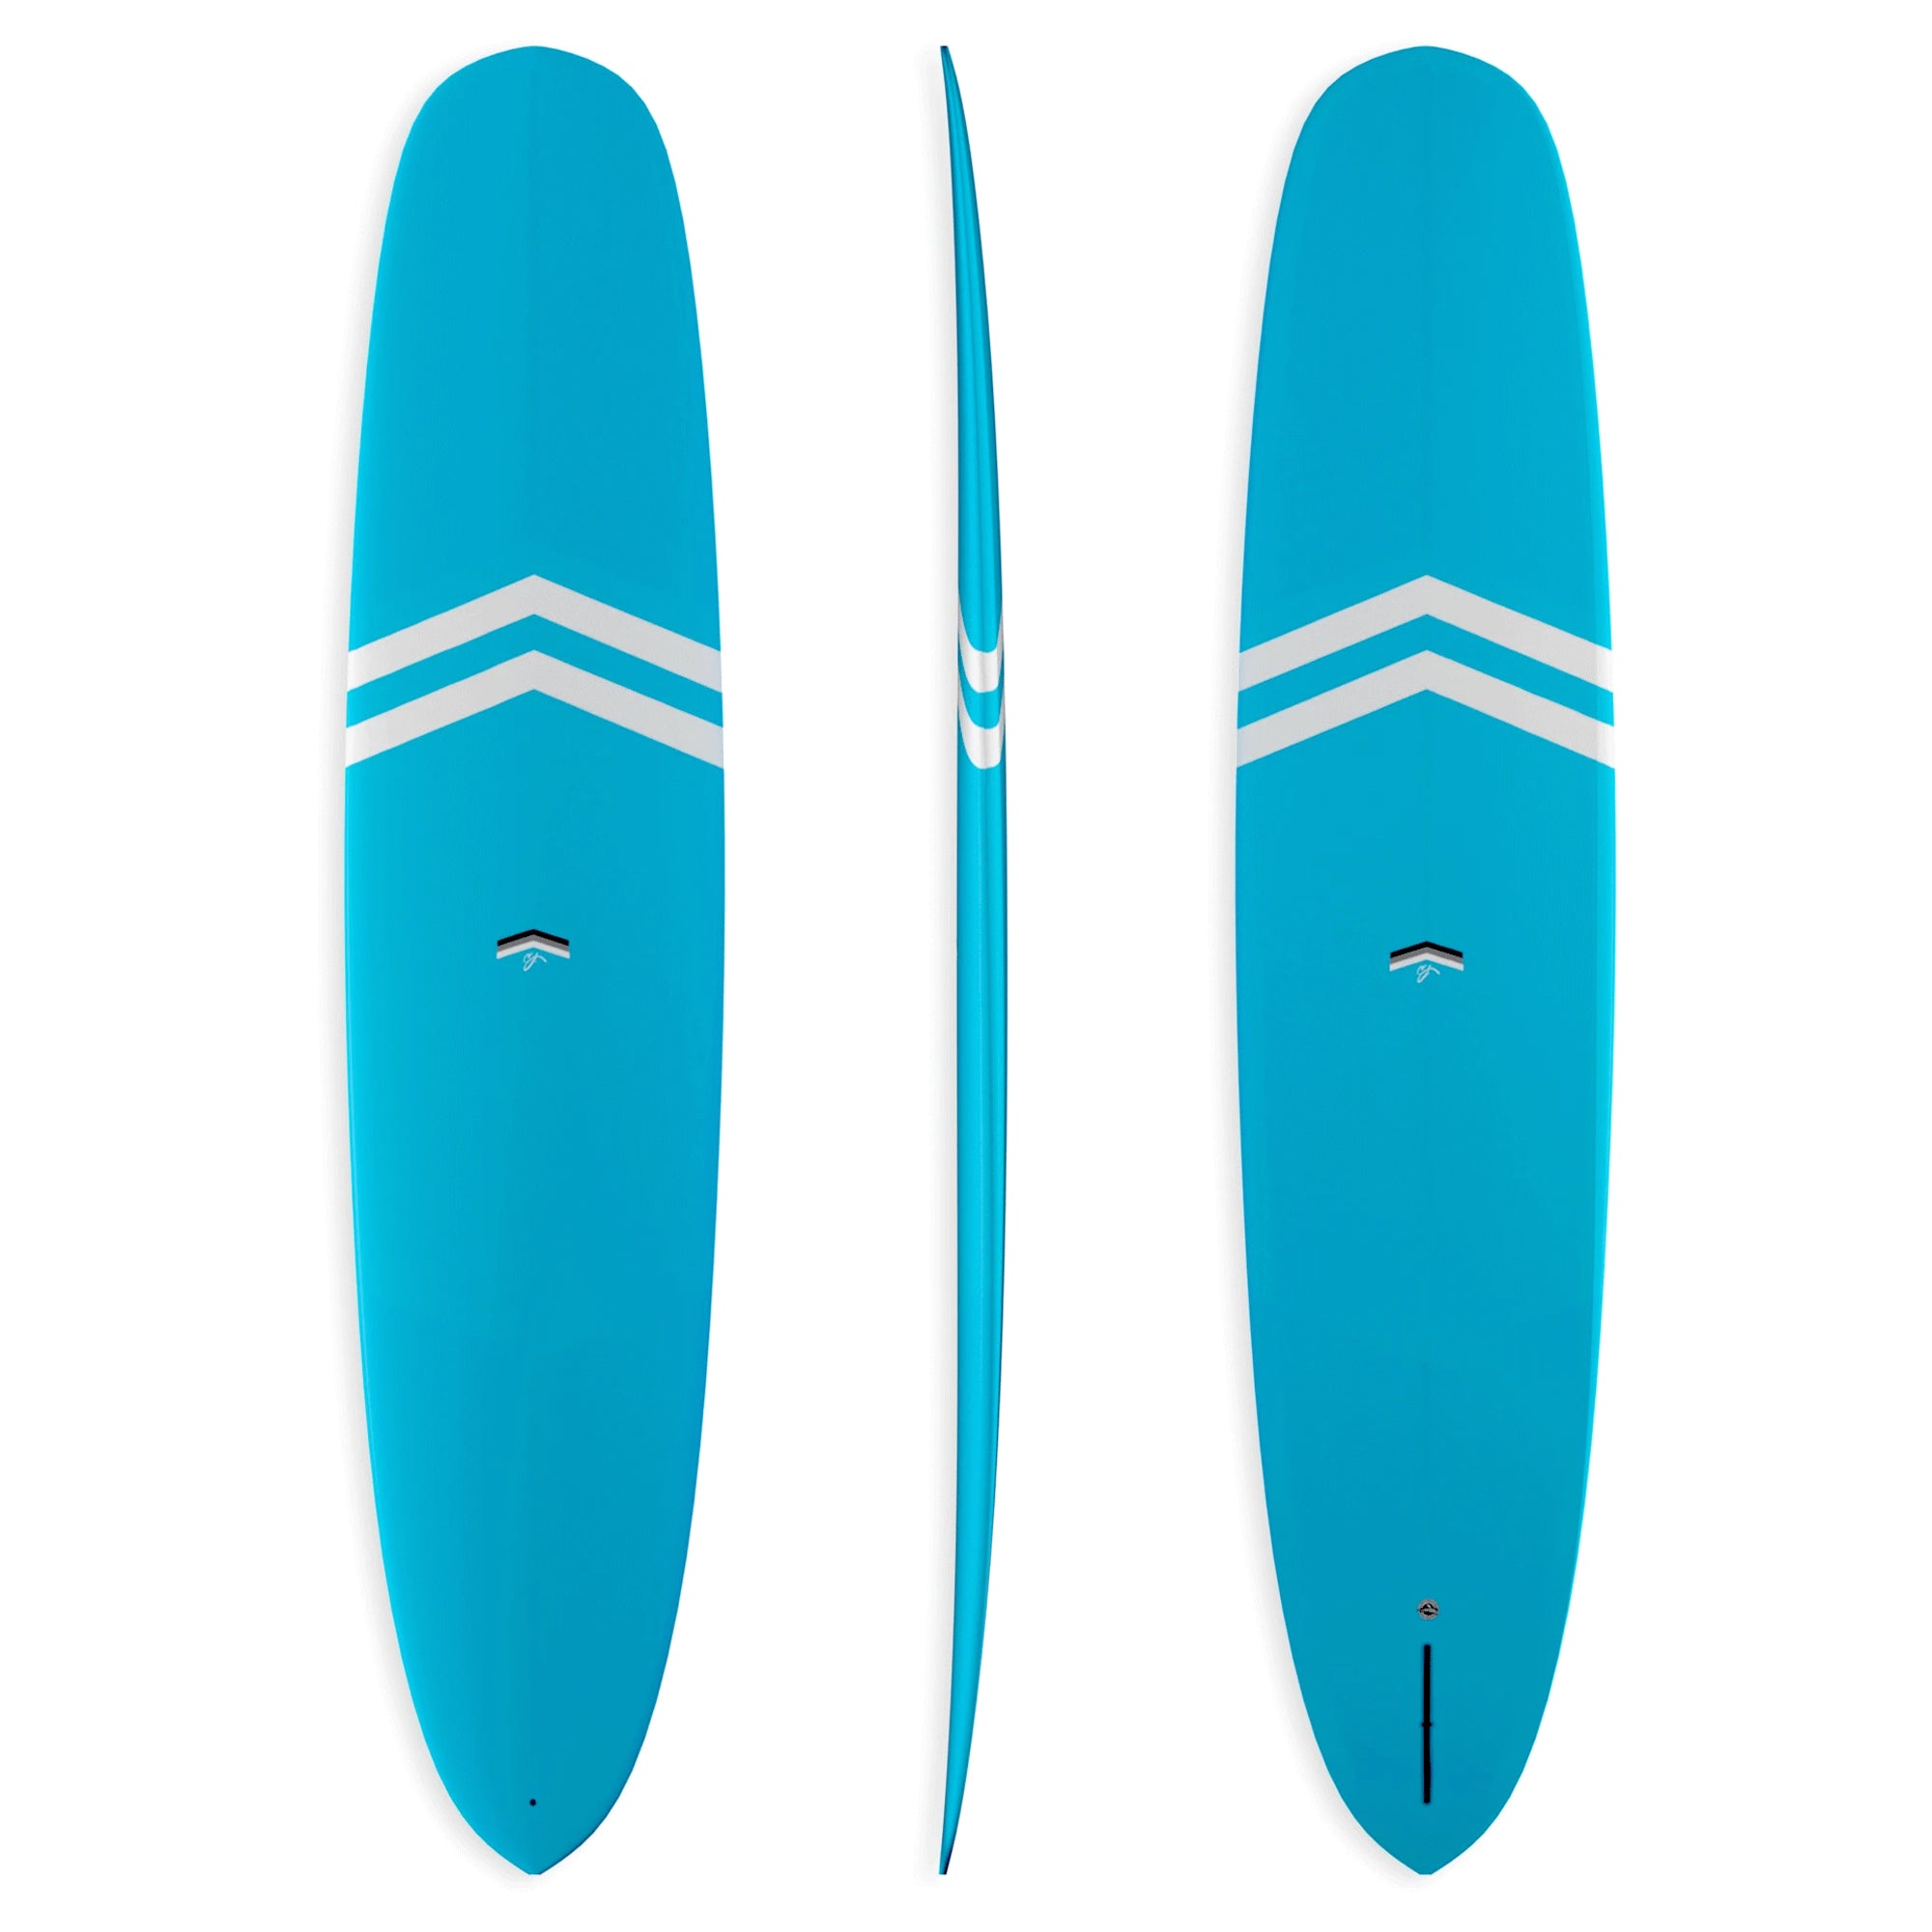 CJ Nelson Neo Classic Thunderbolt Silver Longboard Surfboard